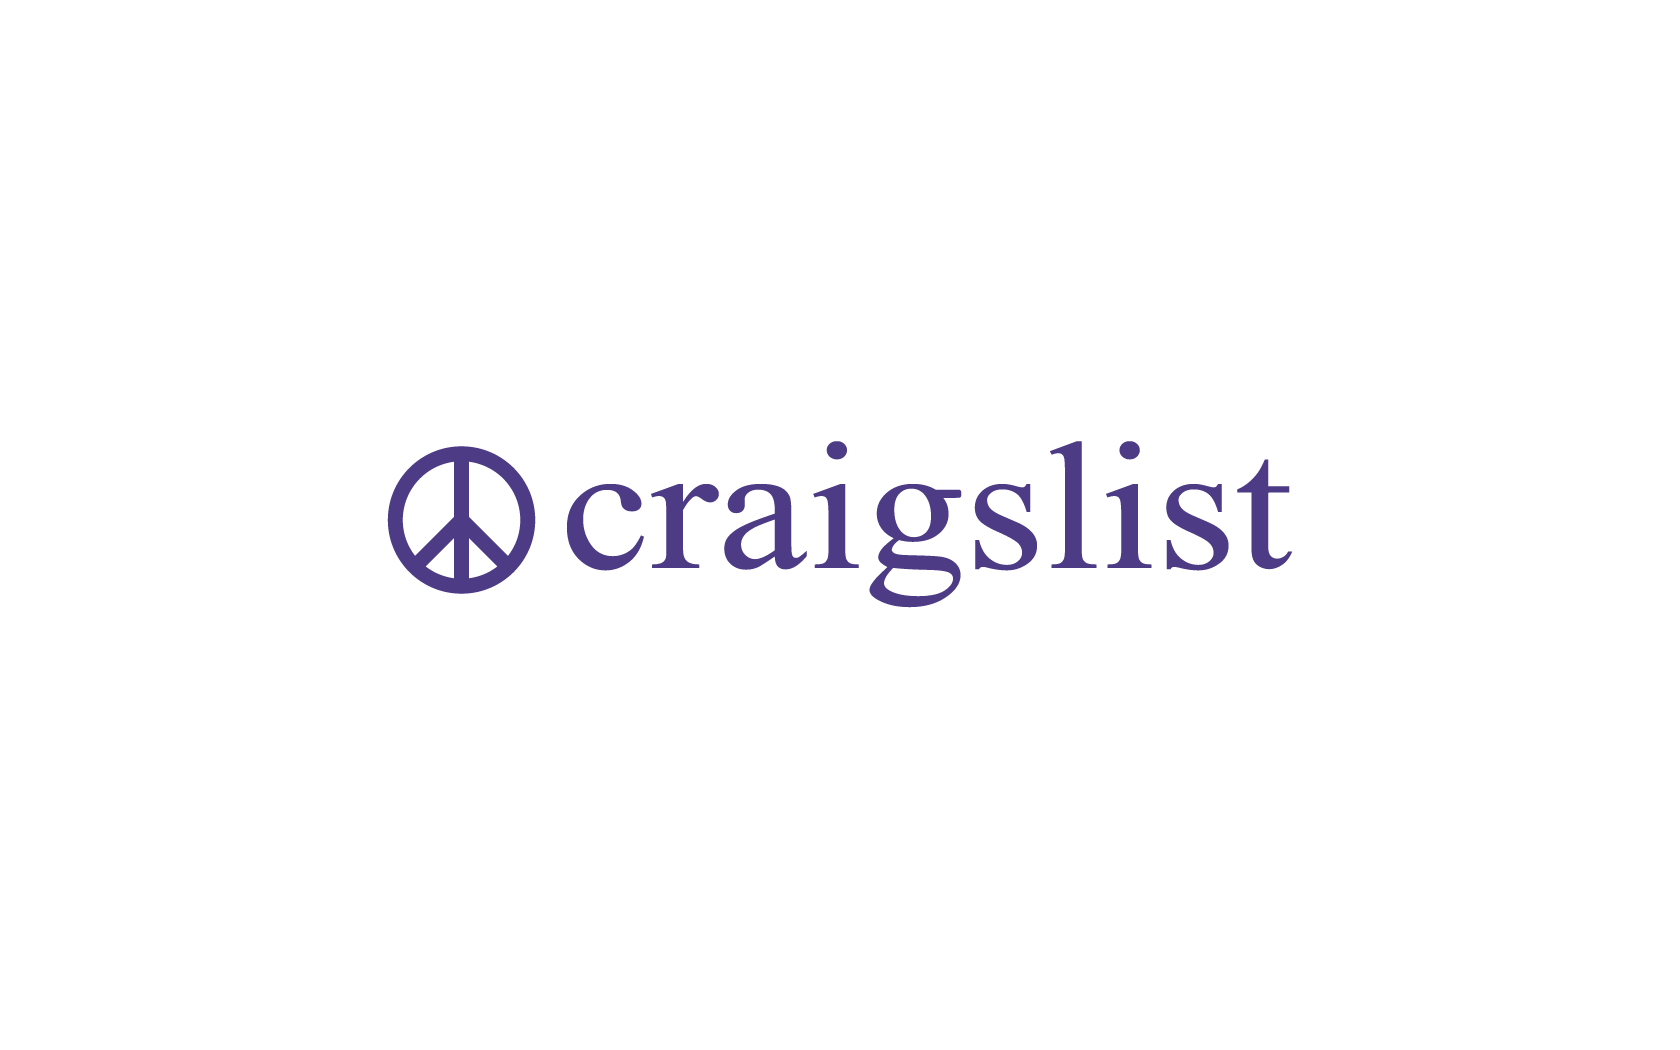 craigslist logo with a peace sign